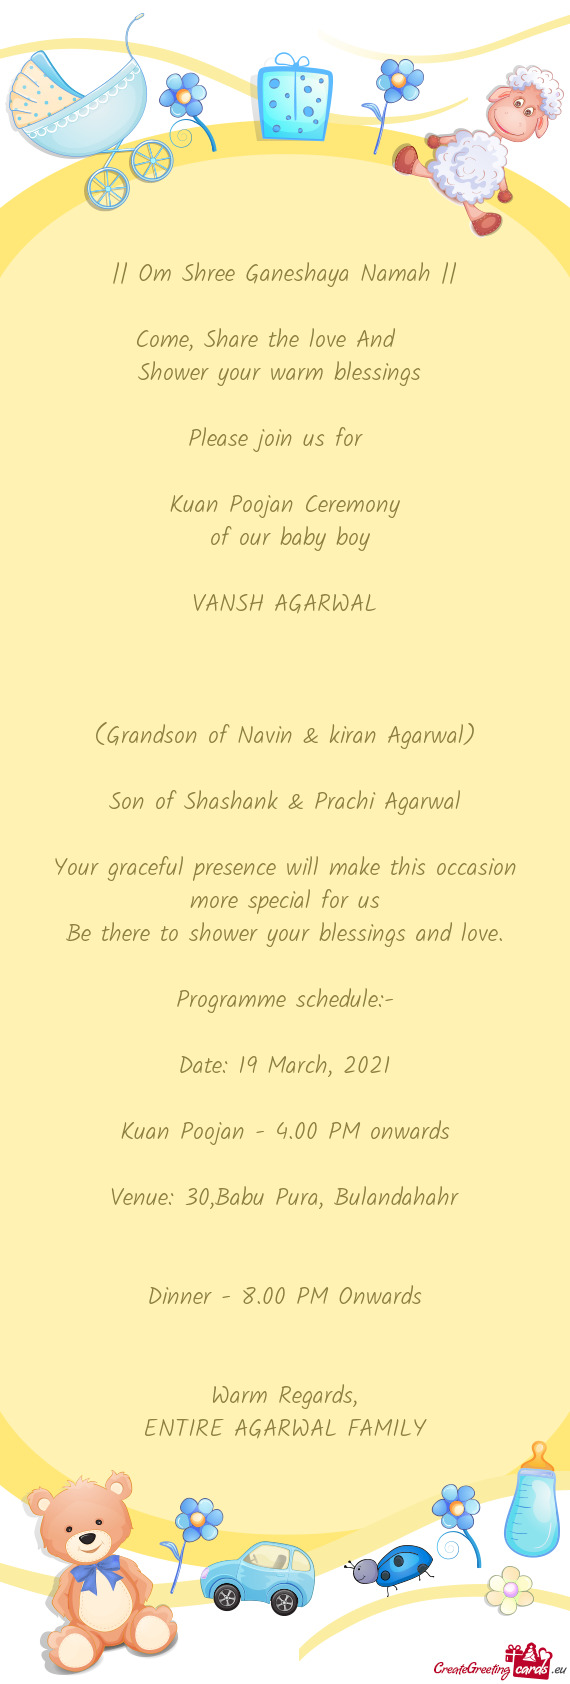 (Grandson of Navin & kiran Agarwal)